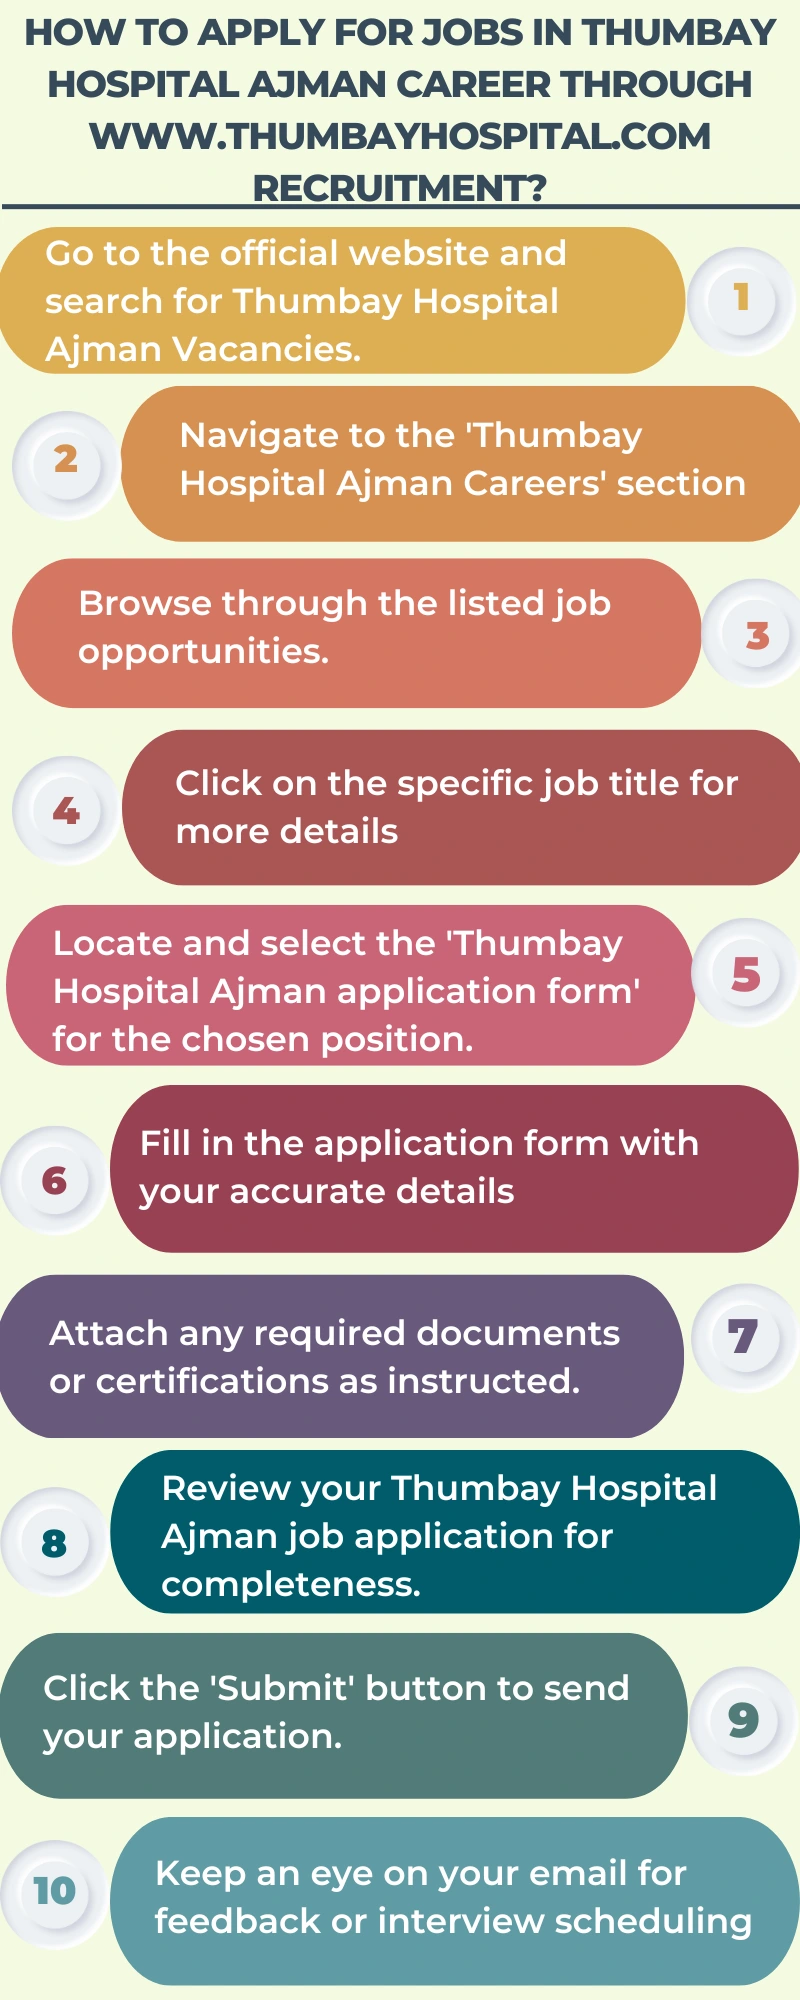 How to Apply for Jobs in Thumbay Hospital Ajman Career through www.thumbayhospital.com recruitment?